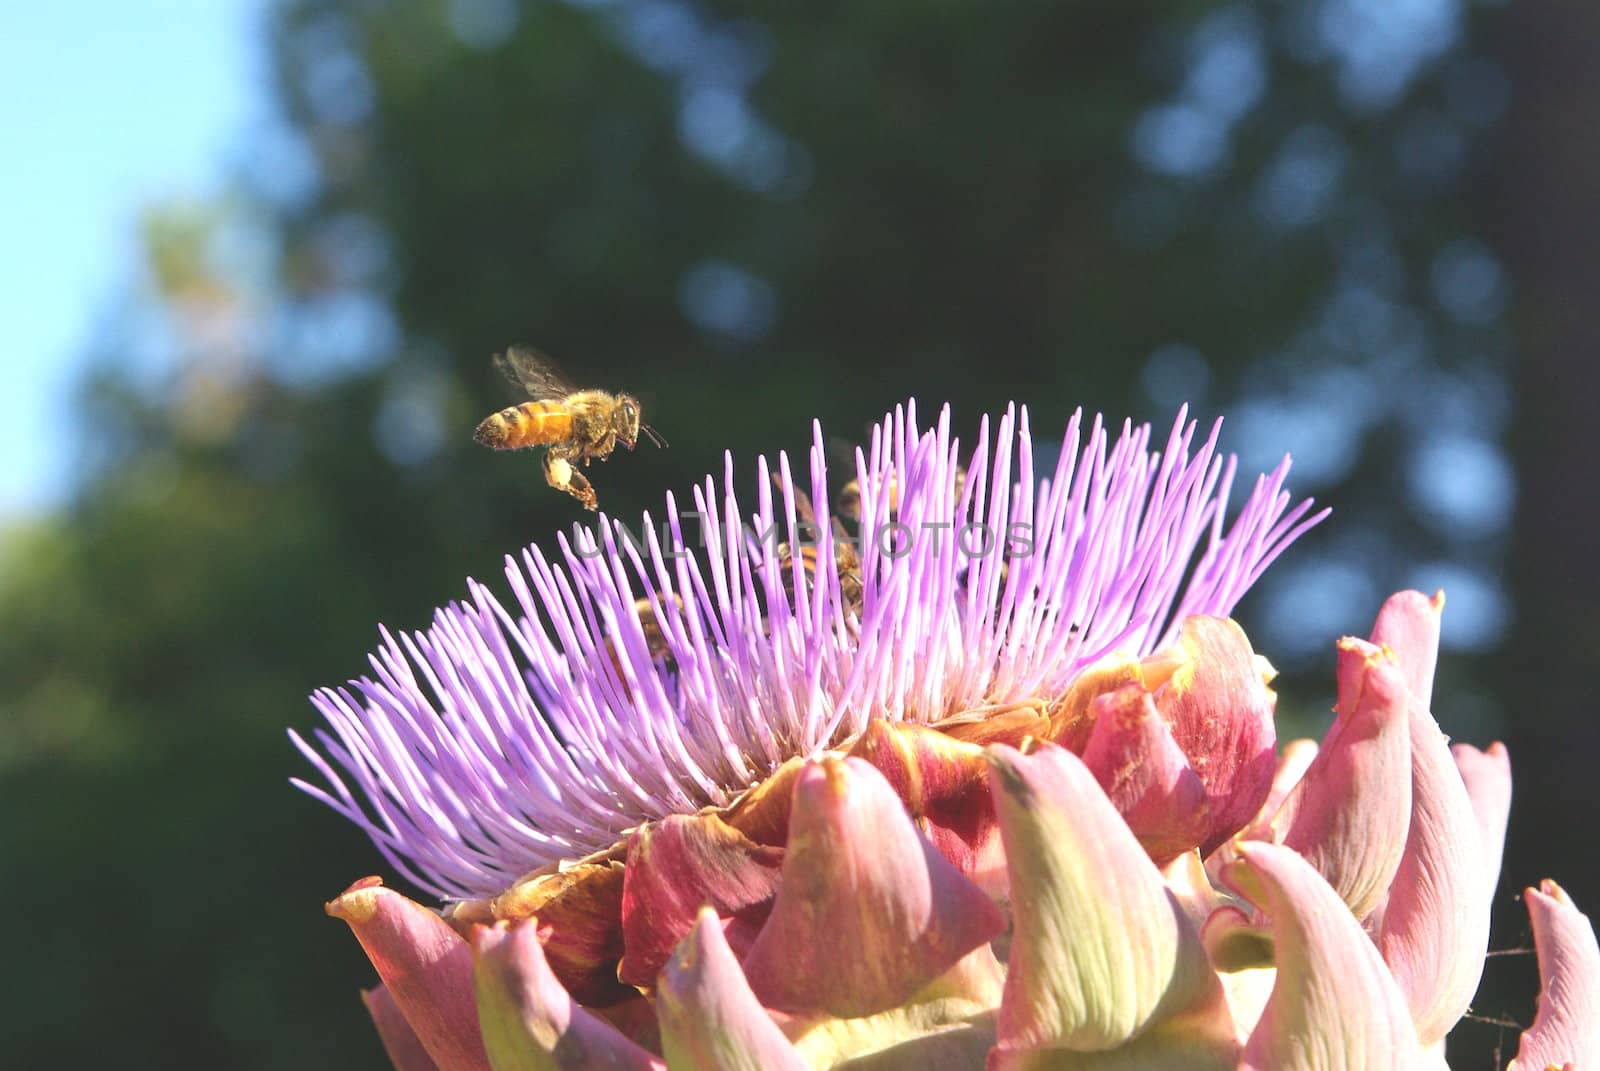 A closeup view of a honey bee landing on an Artichoke flower fully bloomed.